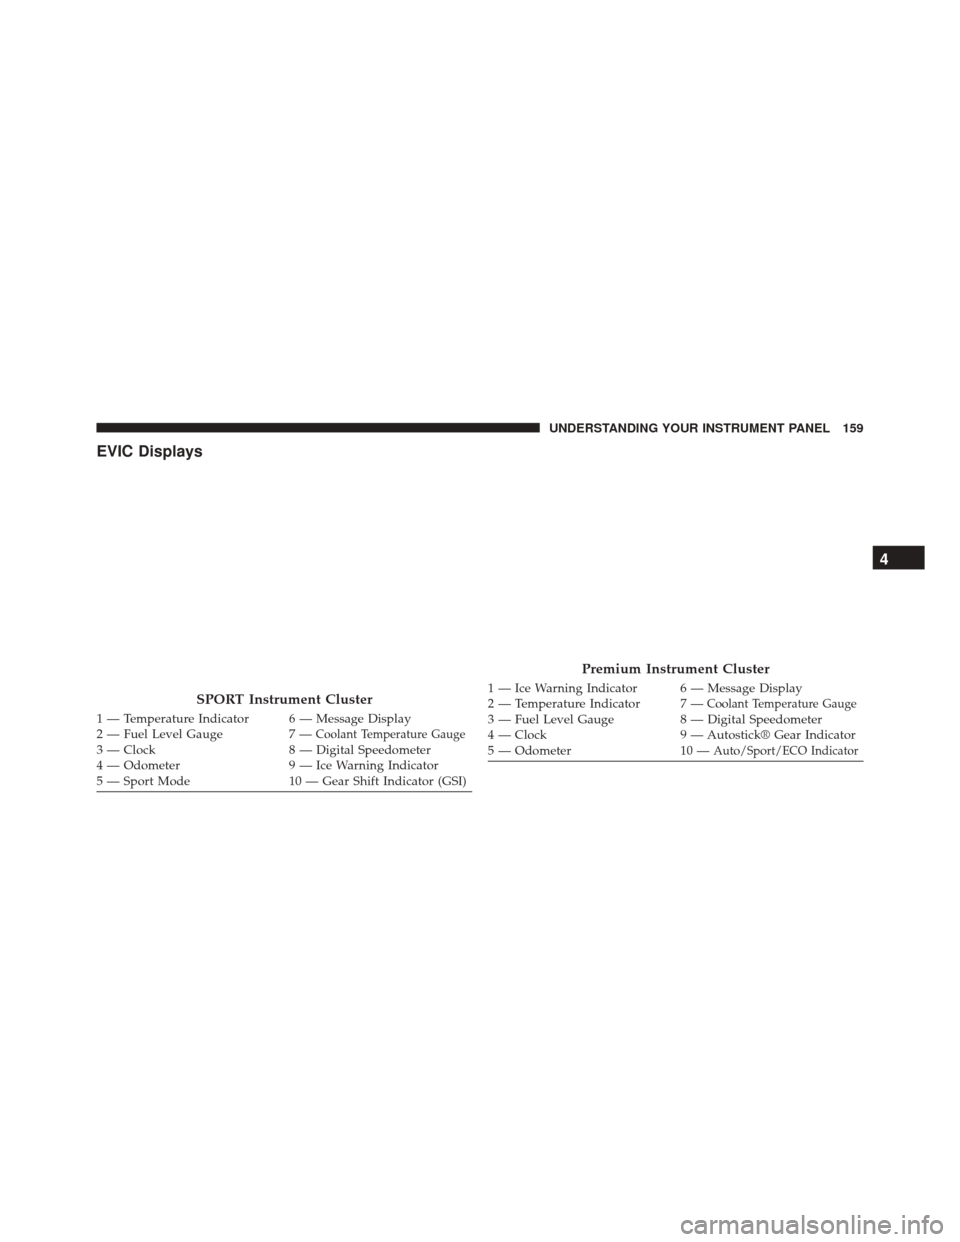 FIAT 500 2014 2.G Owners Manual EVIC Displays
SPORT Instrument Cluster
1 — Temperature Indicator 6 — Message Display
2 — Fuel Level Gauge 7 —Coolant Temperature Gauge3 — Clock8 — Digital Speedometer
4 — Odometer 9 — 